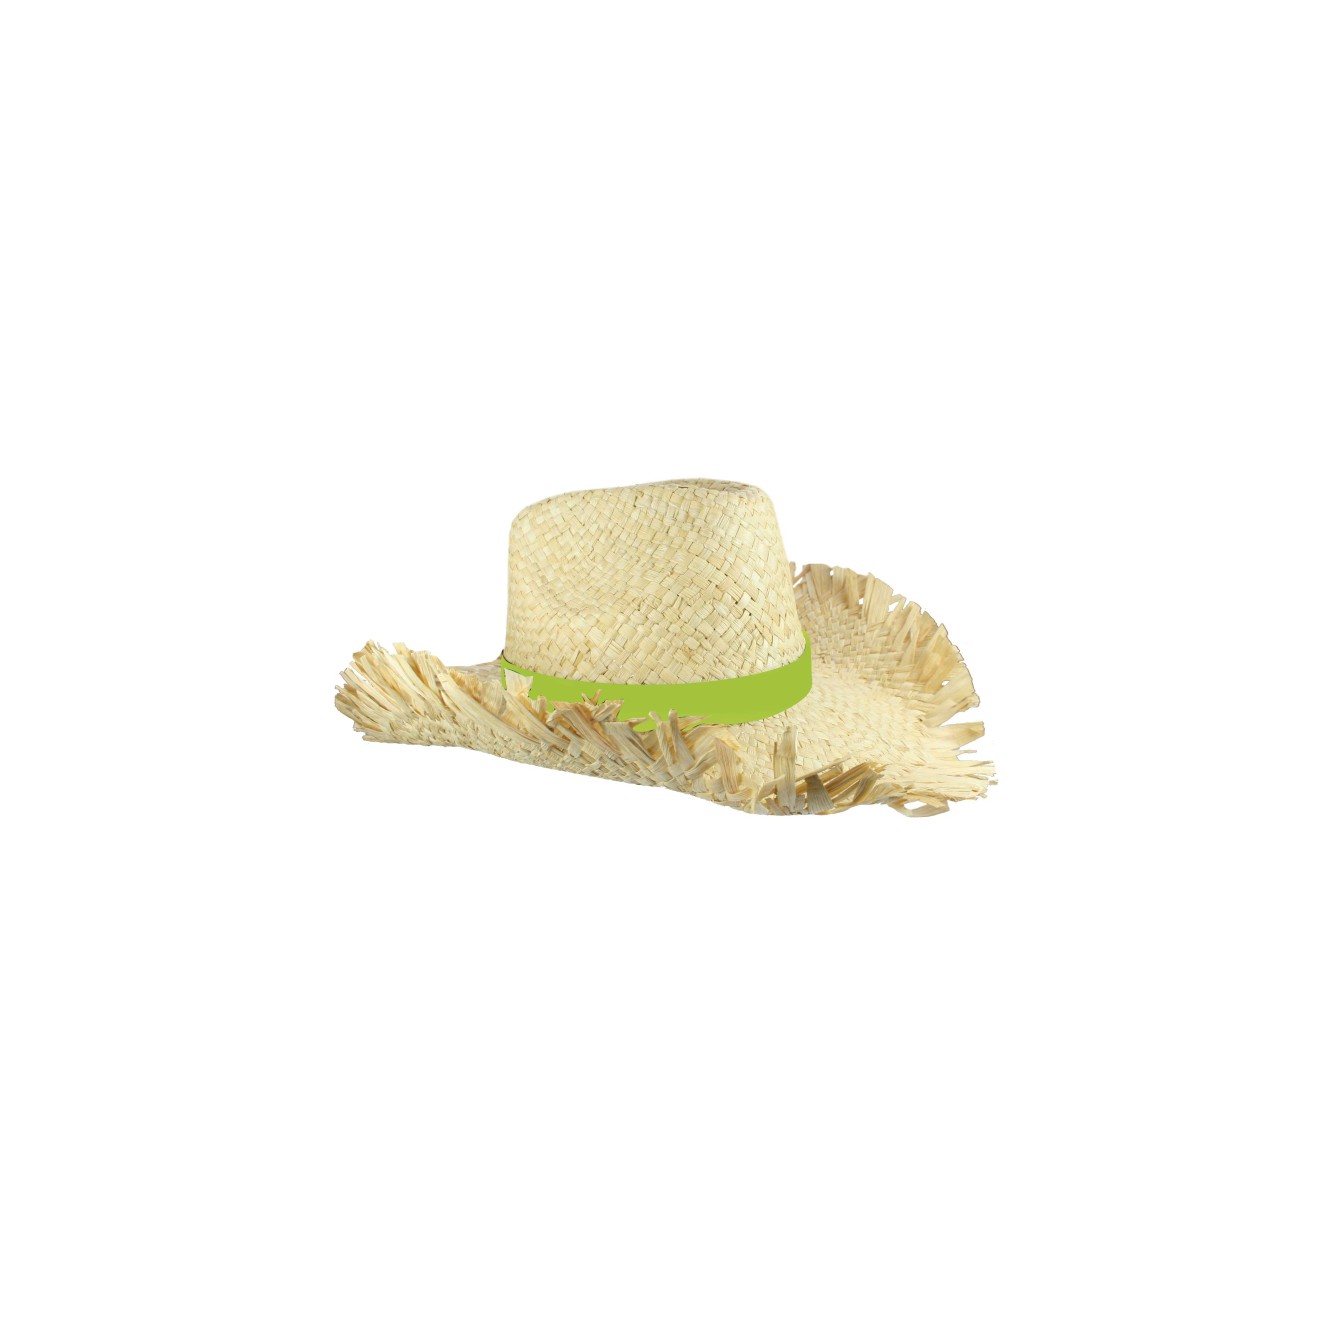 Corn hat